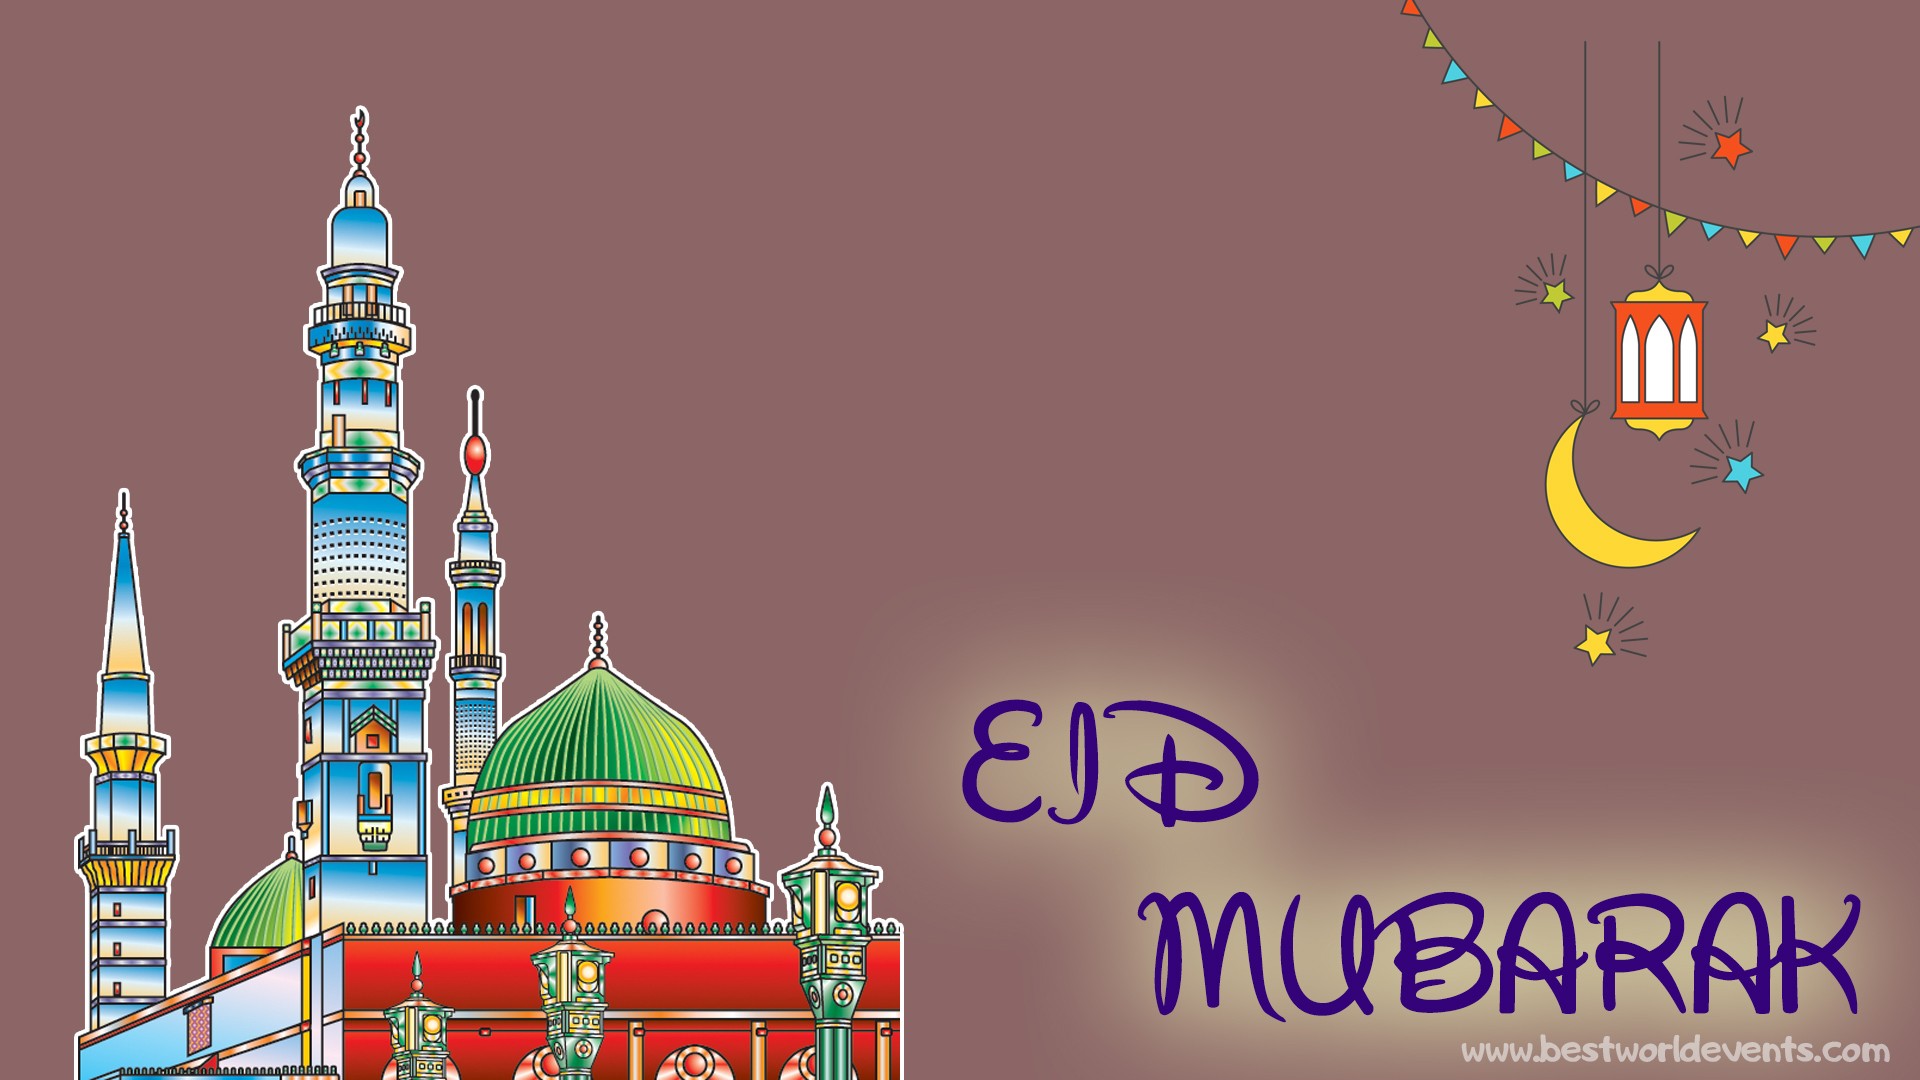 Eid Mubarak 2019 wishes